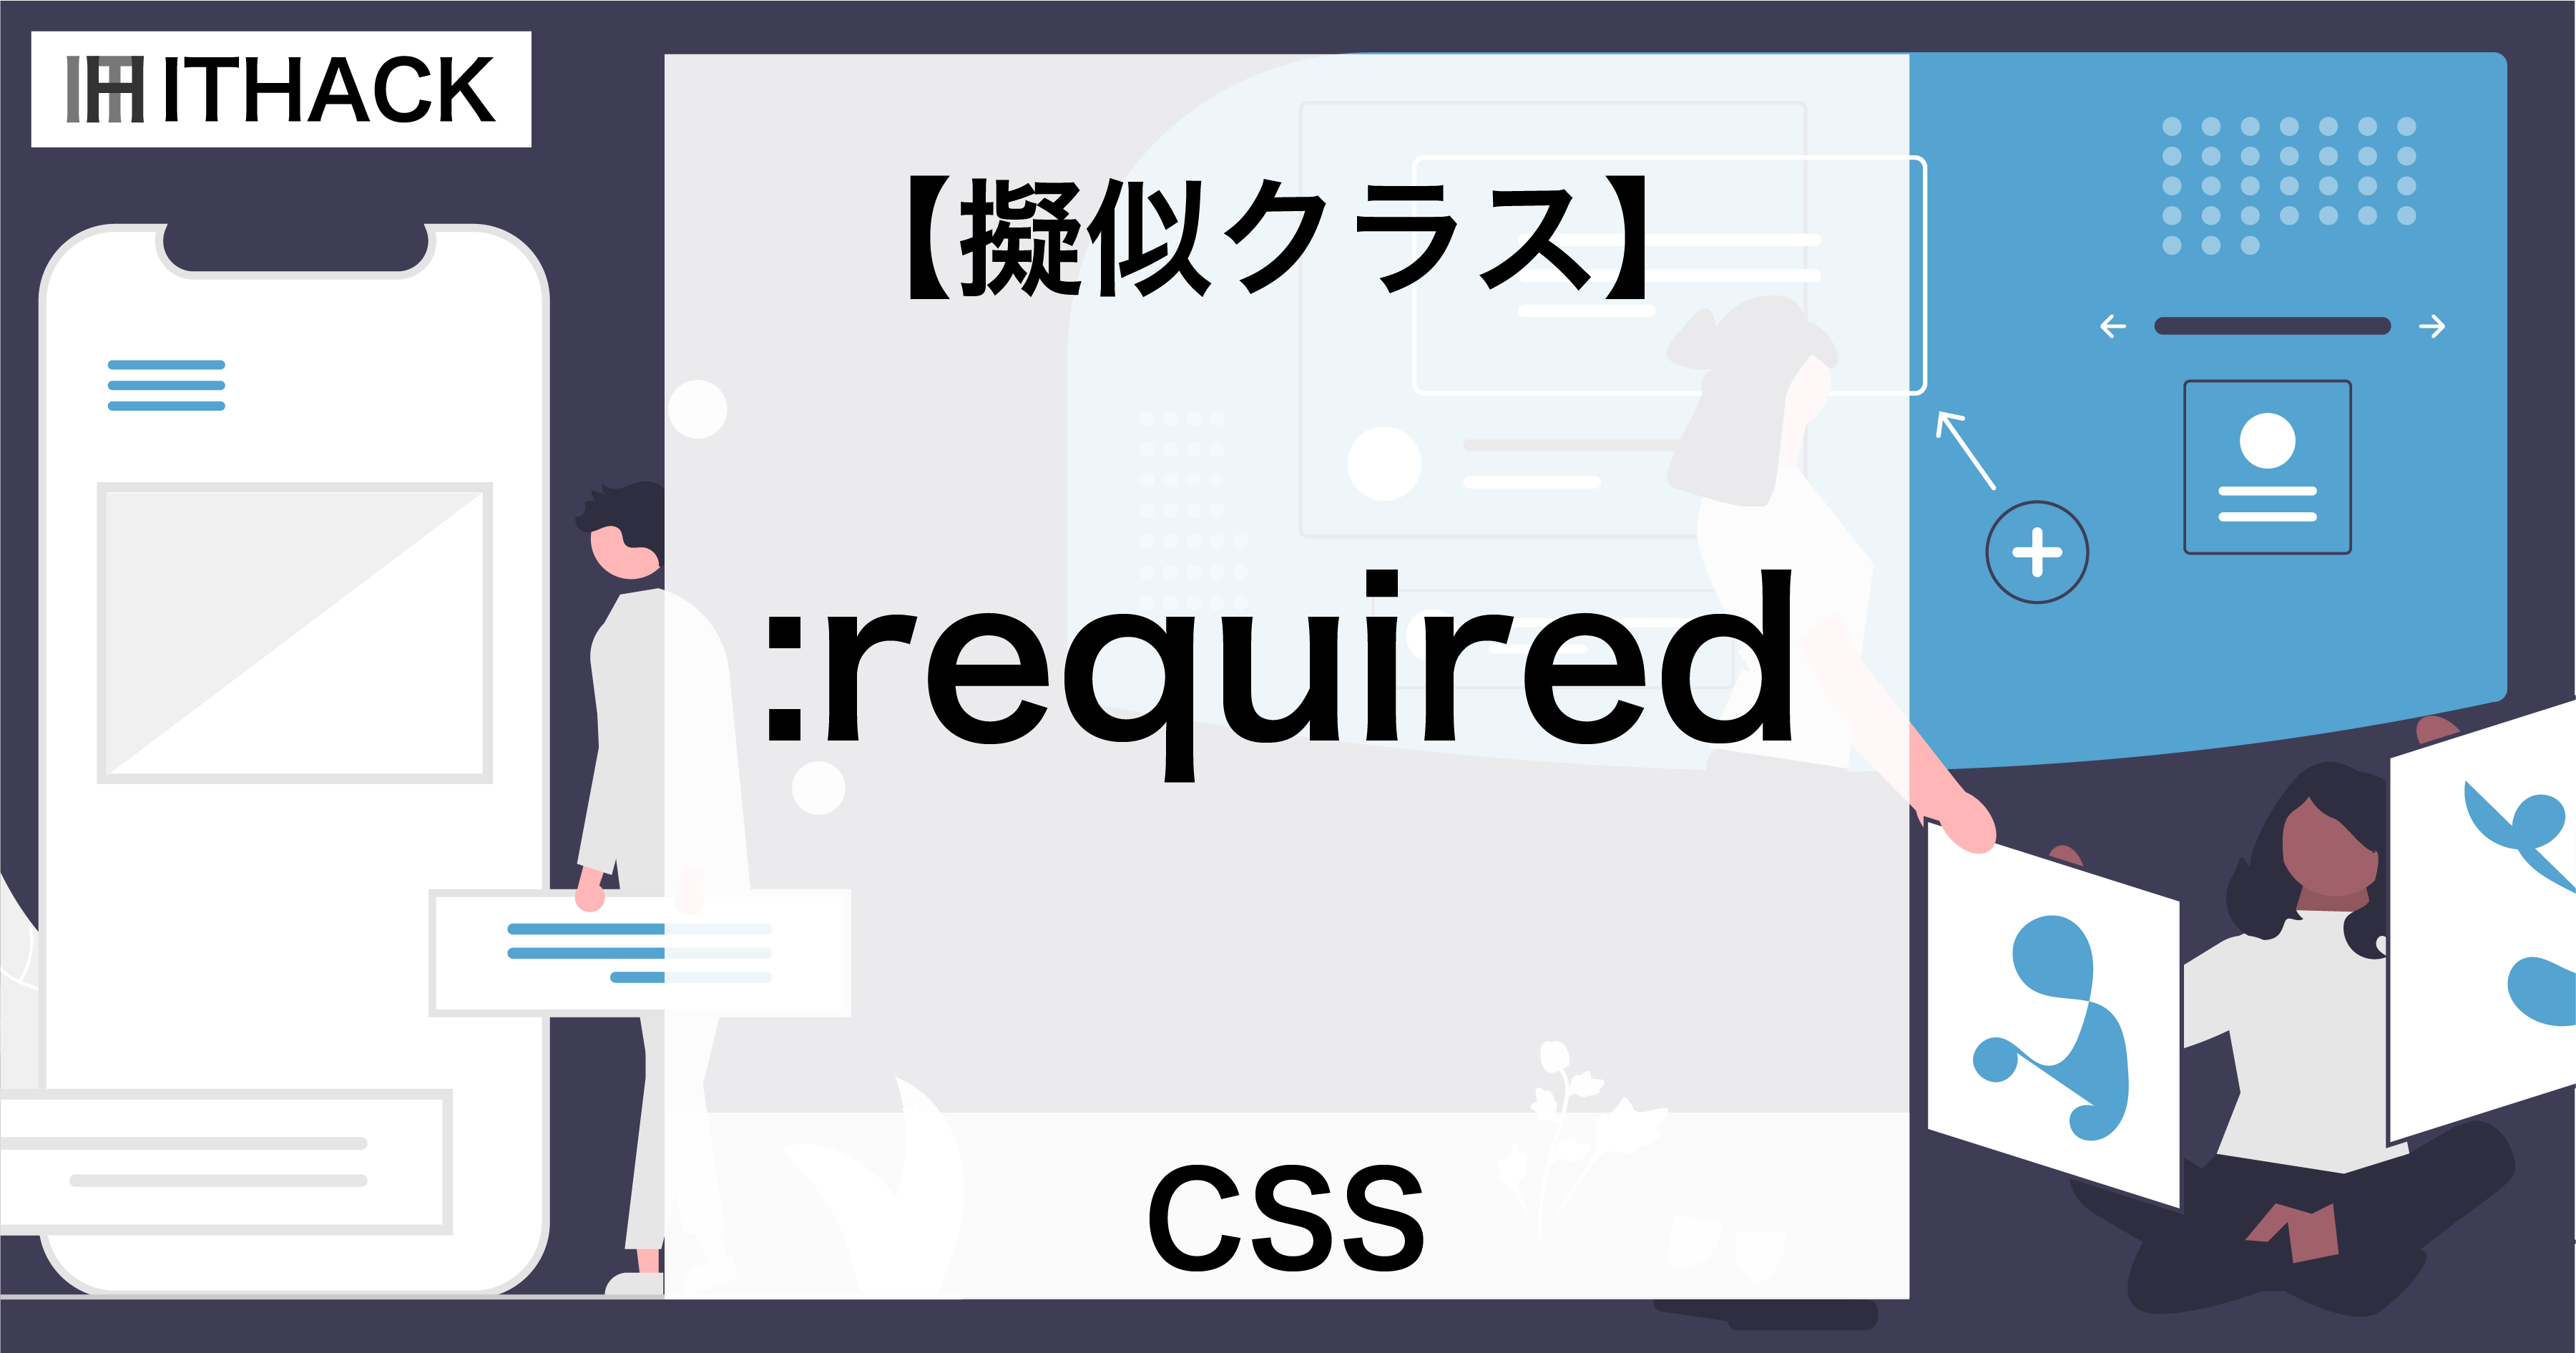 【CSS】:required（擬似クラス） - 必須状態